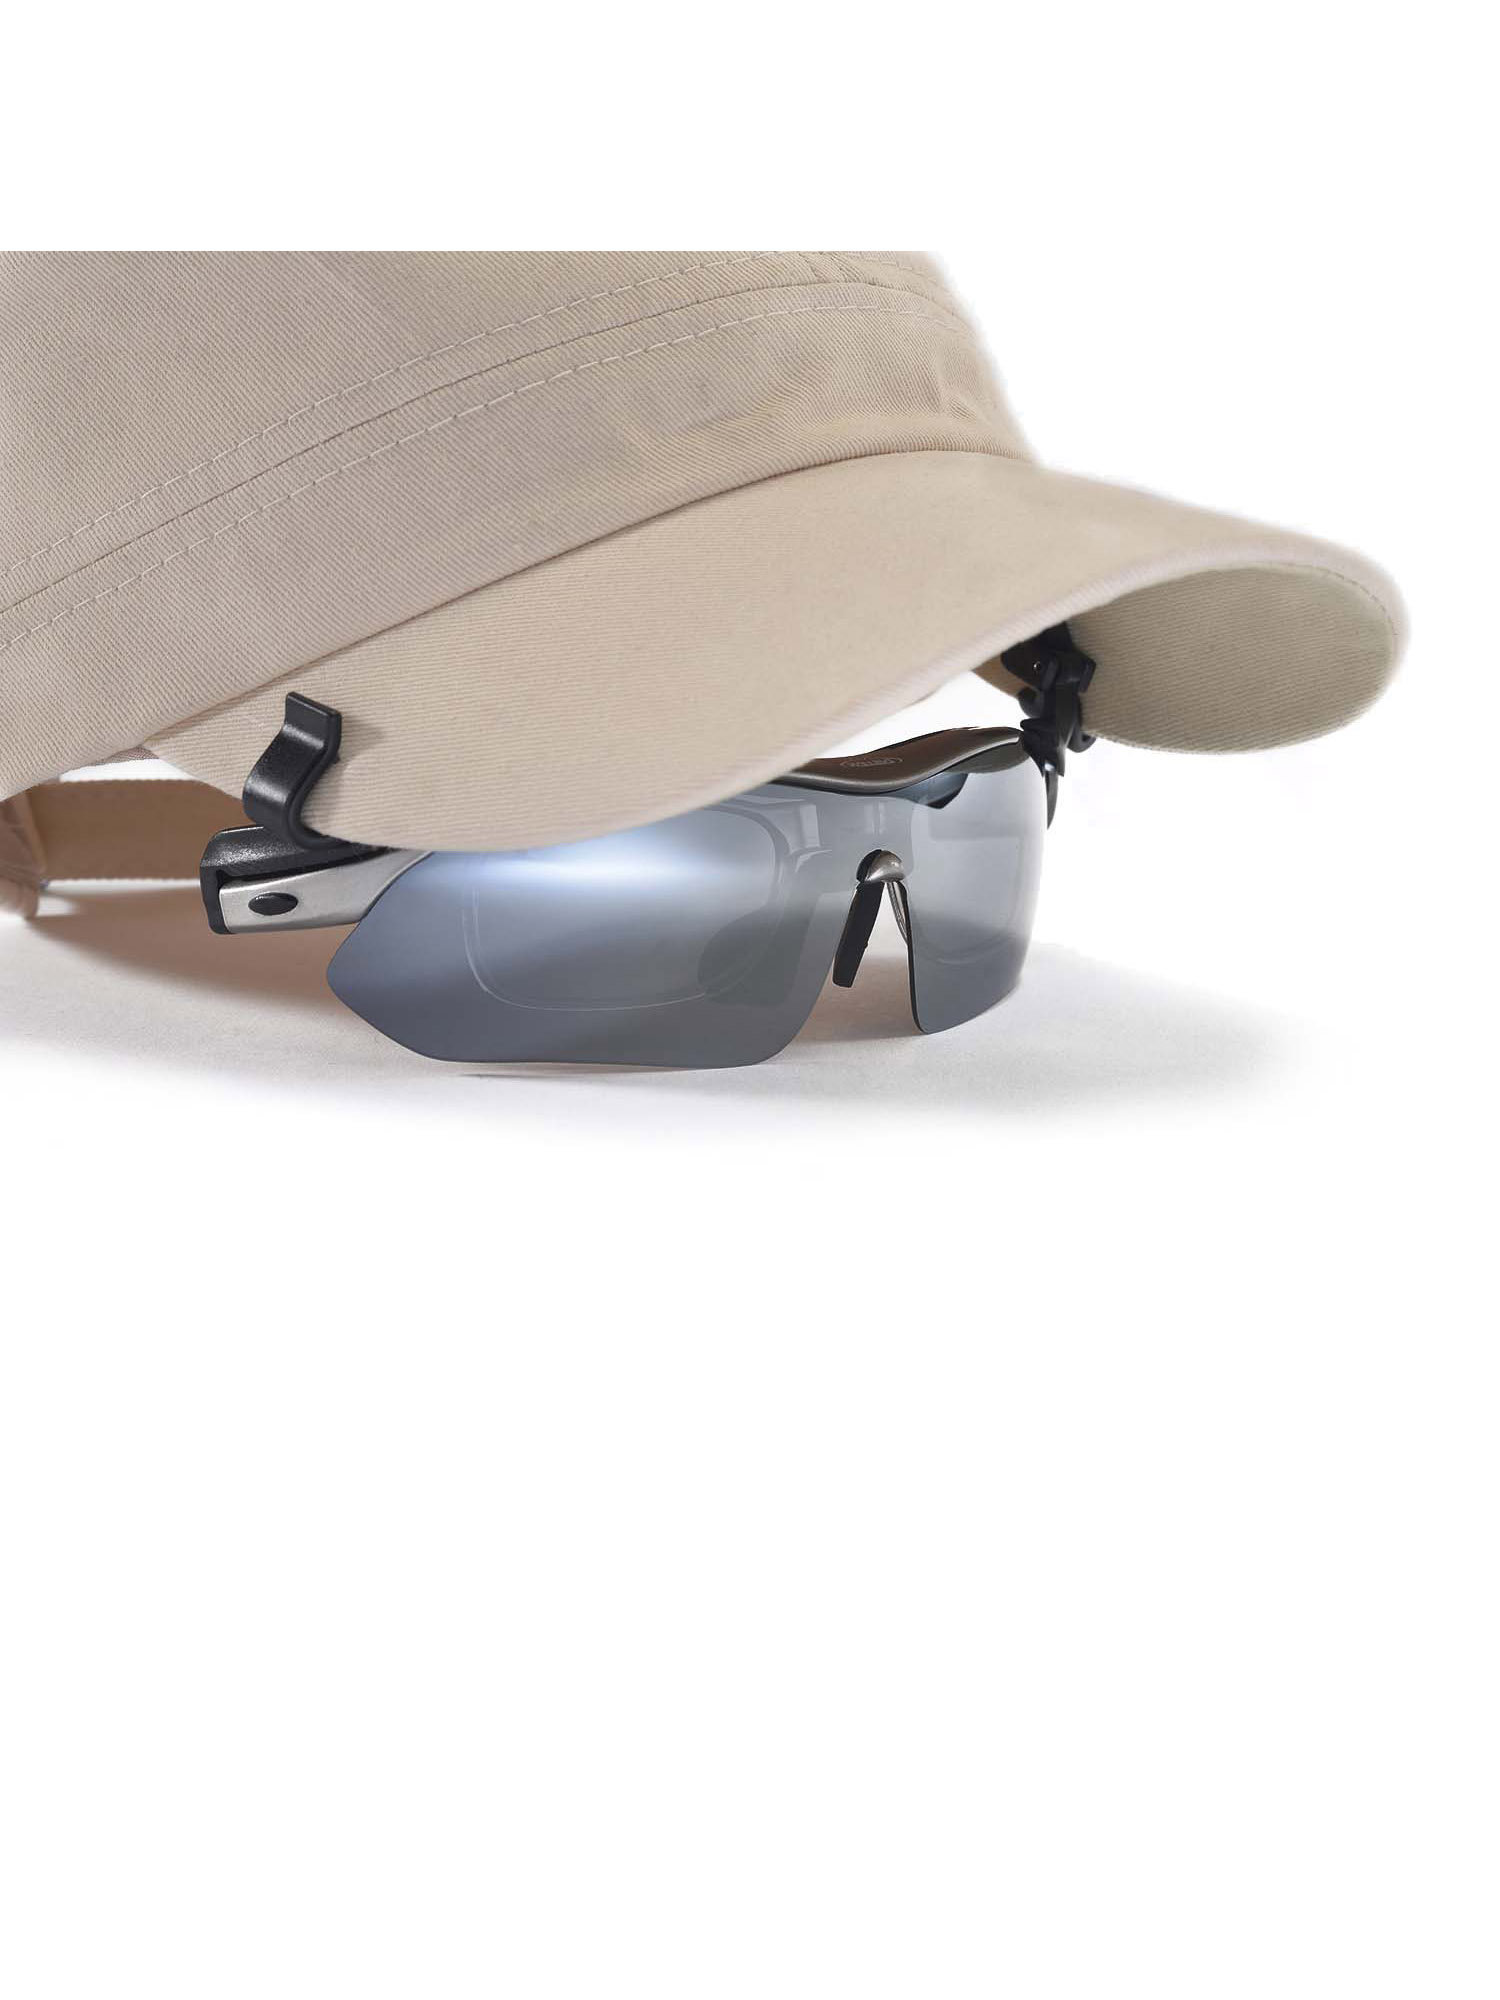 Walleva Polarized Sports Sunglasses With TR90 Frame - Multiple Options Available (Titanium Mirror Coated - Polarized) - image 4 of 8